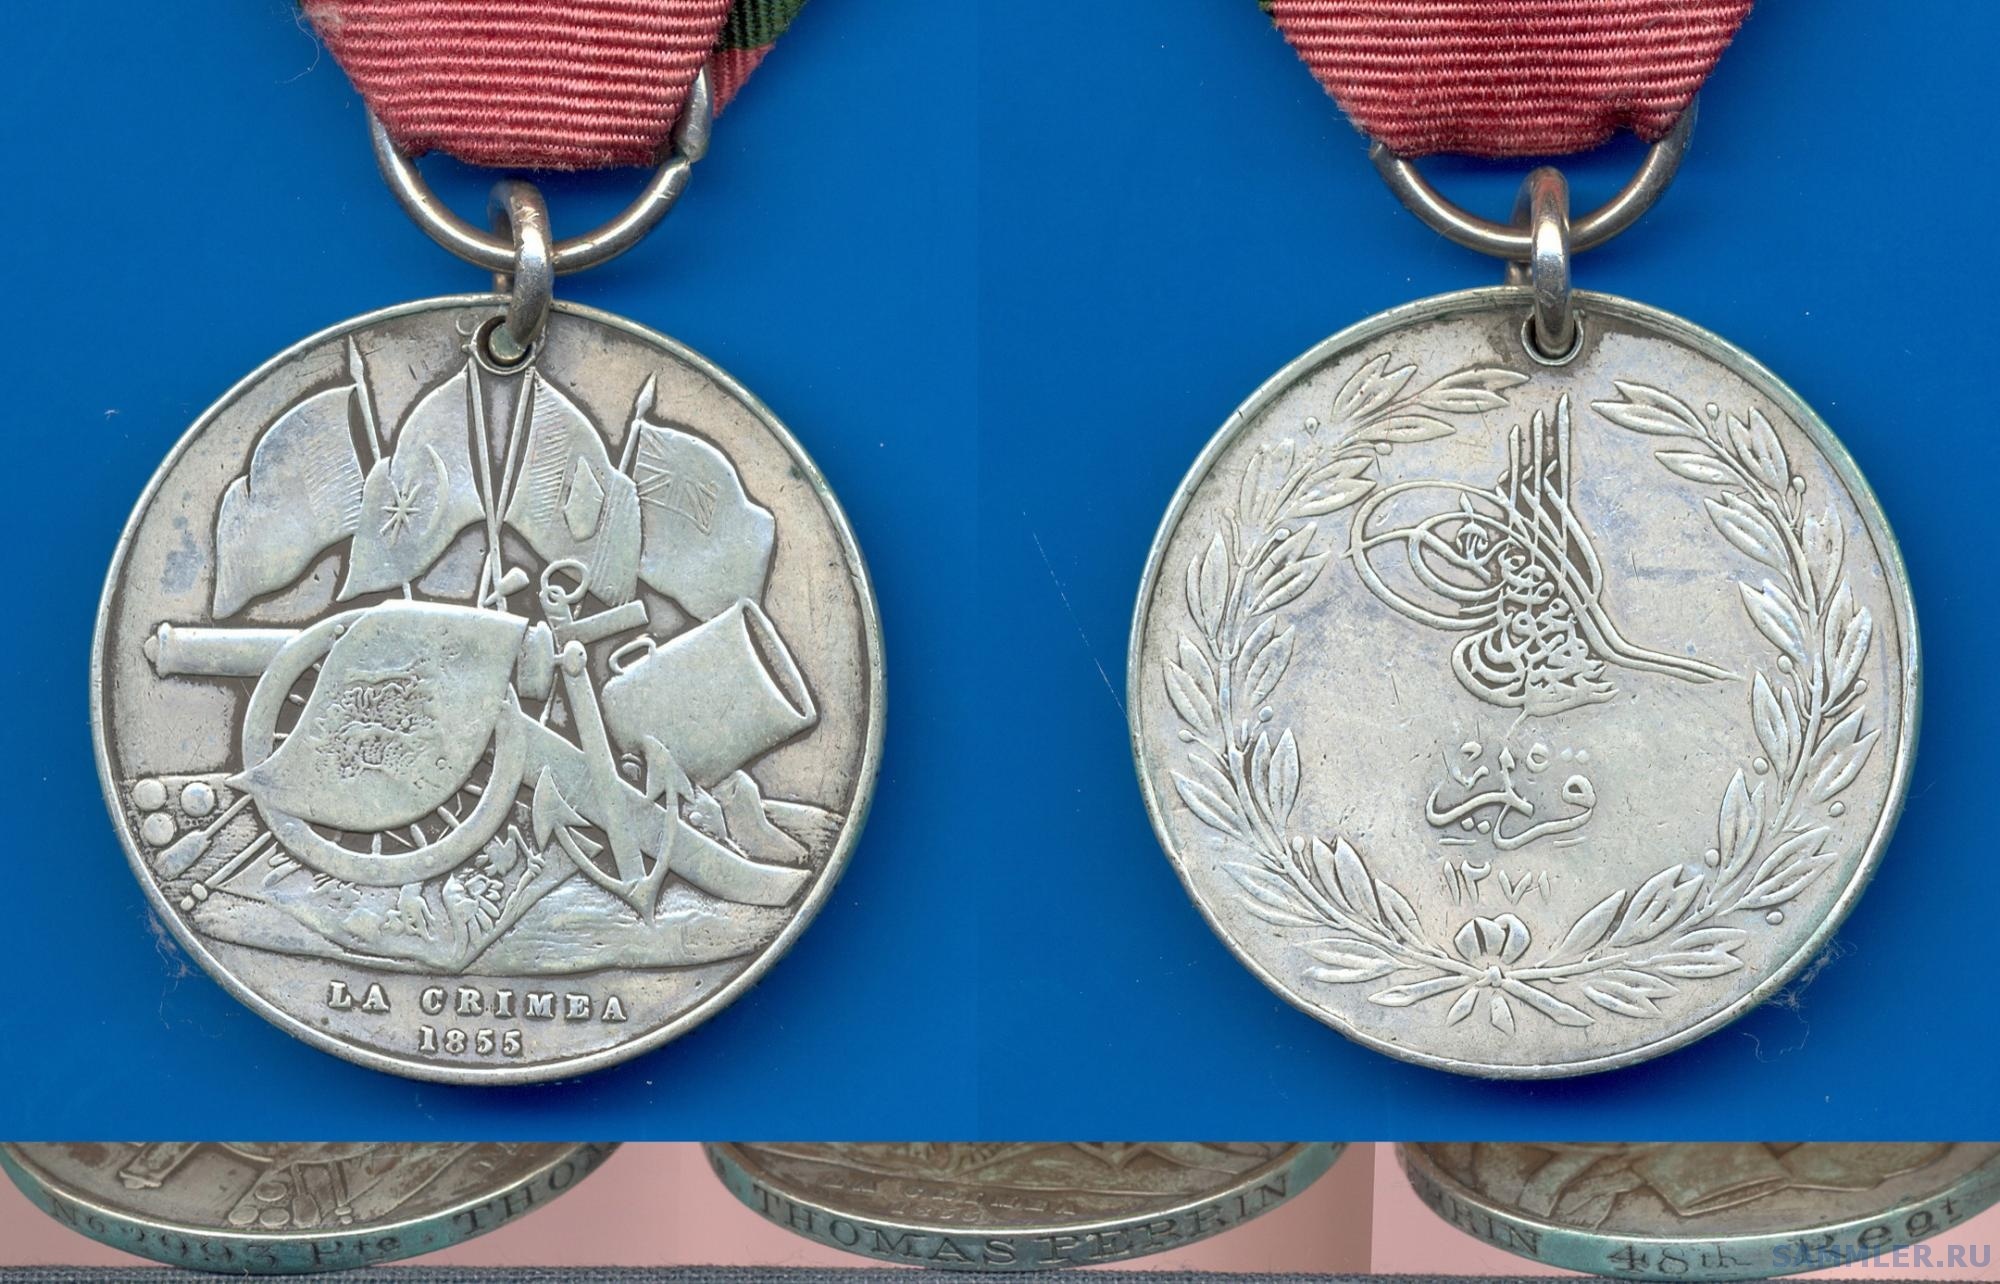 120.i Turkish Crimea Medal (Sardinian issue) to 2993 Pte. THOMAS PERRIN 48th Reg (3).jpg